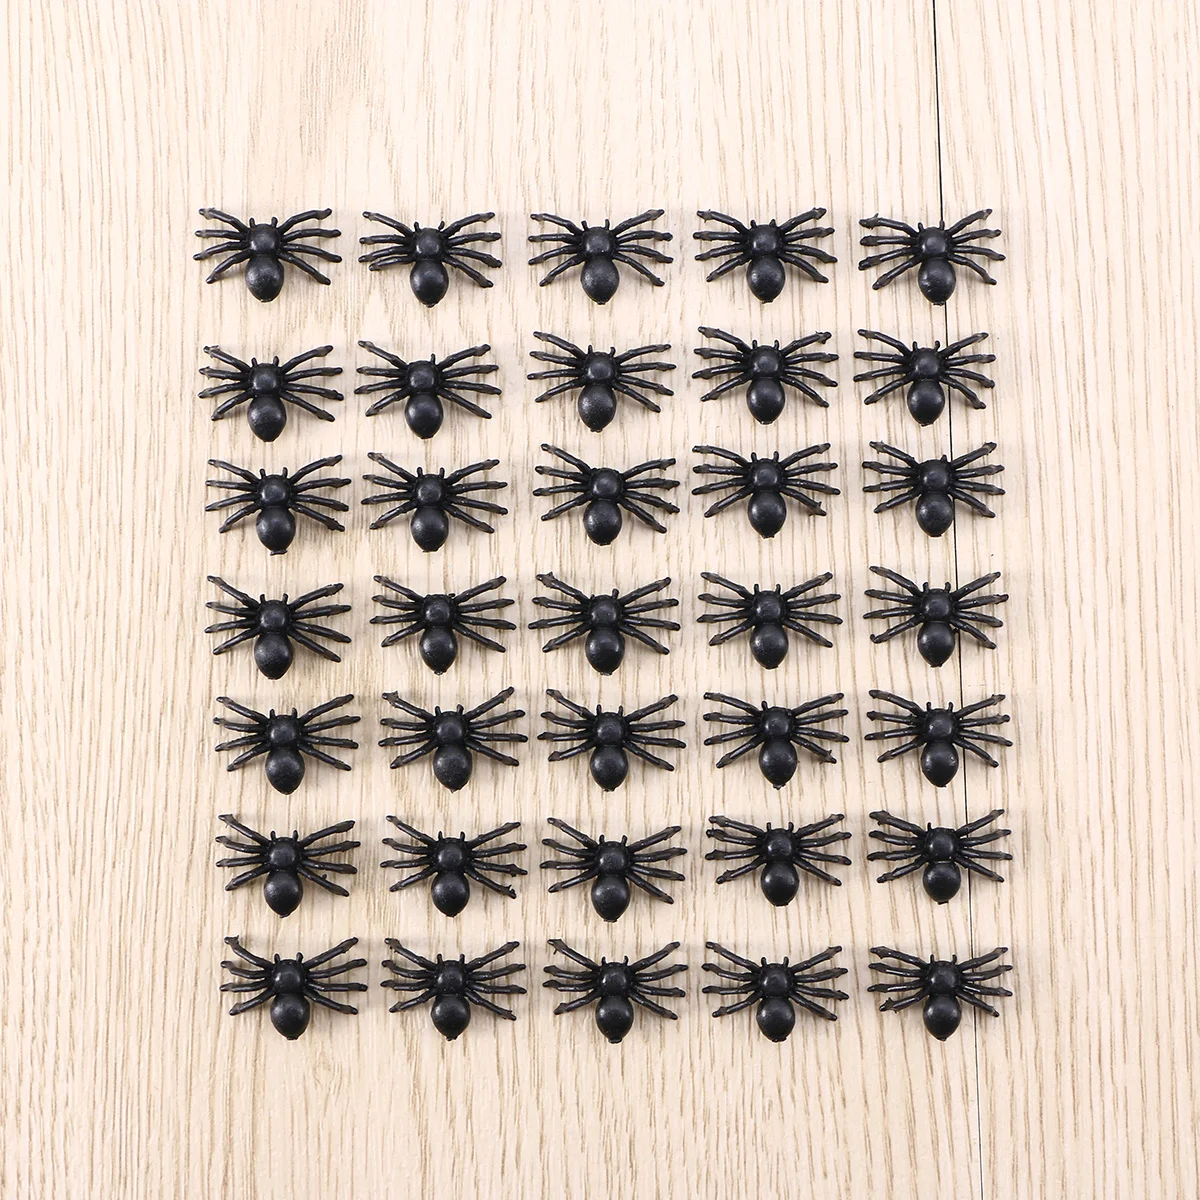 

100 Spider Black Spider Prop Scary Spider Figurines Pranks Prop Haunted House Decoration Favors